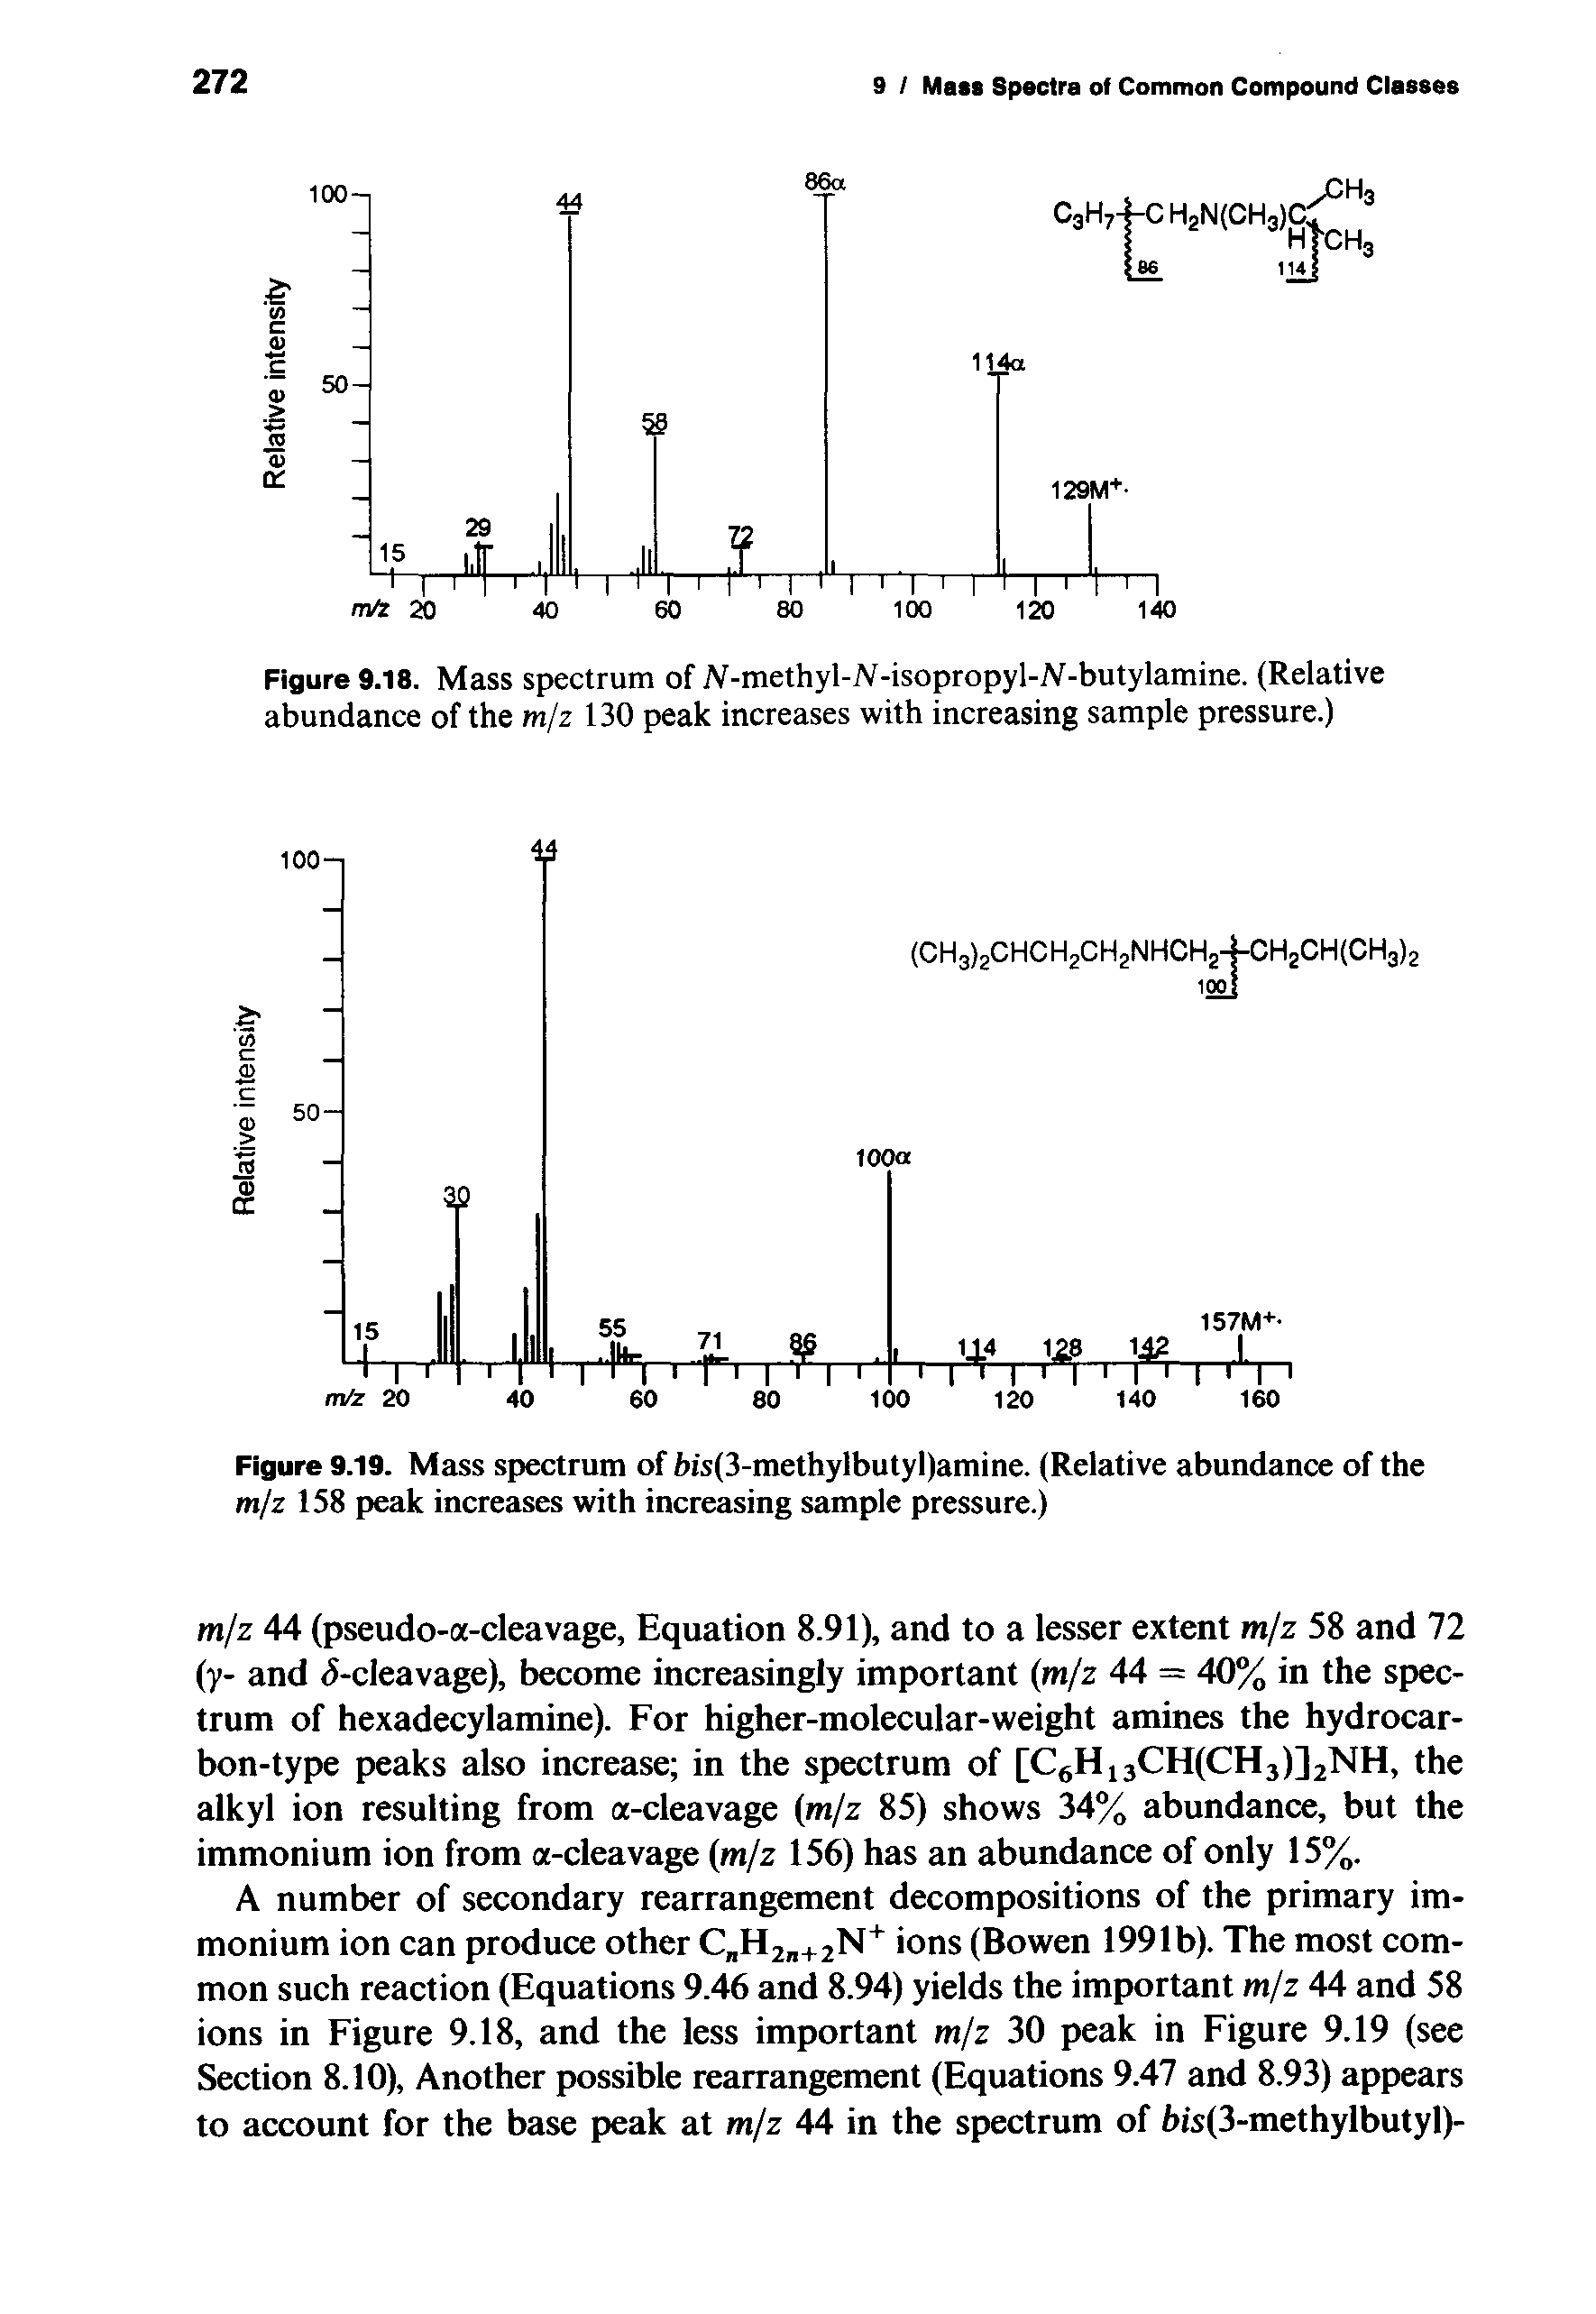 Figure 9.19. Mass spectrum of bis(3-methylbutyl)amine. (Relative abundance of the m/z 158 peak increases with increasing sample pressure.)...